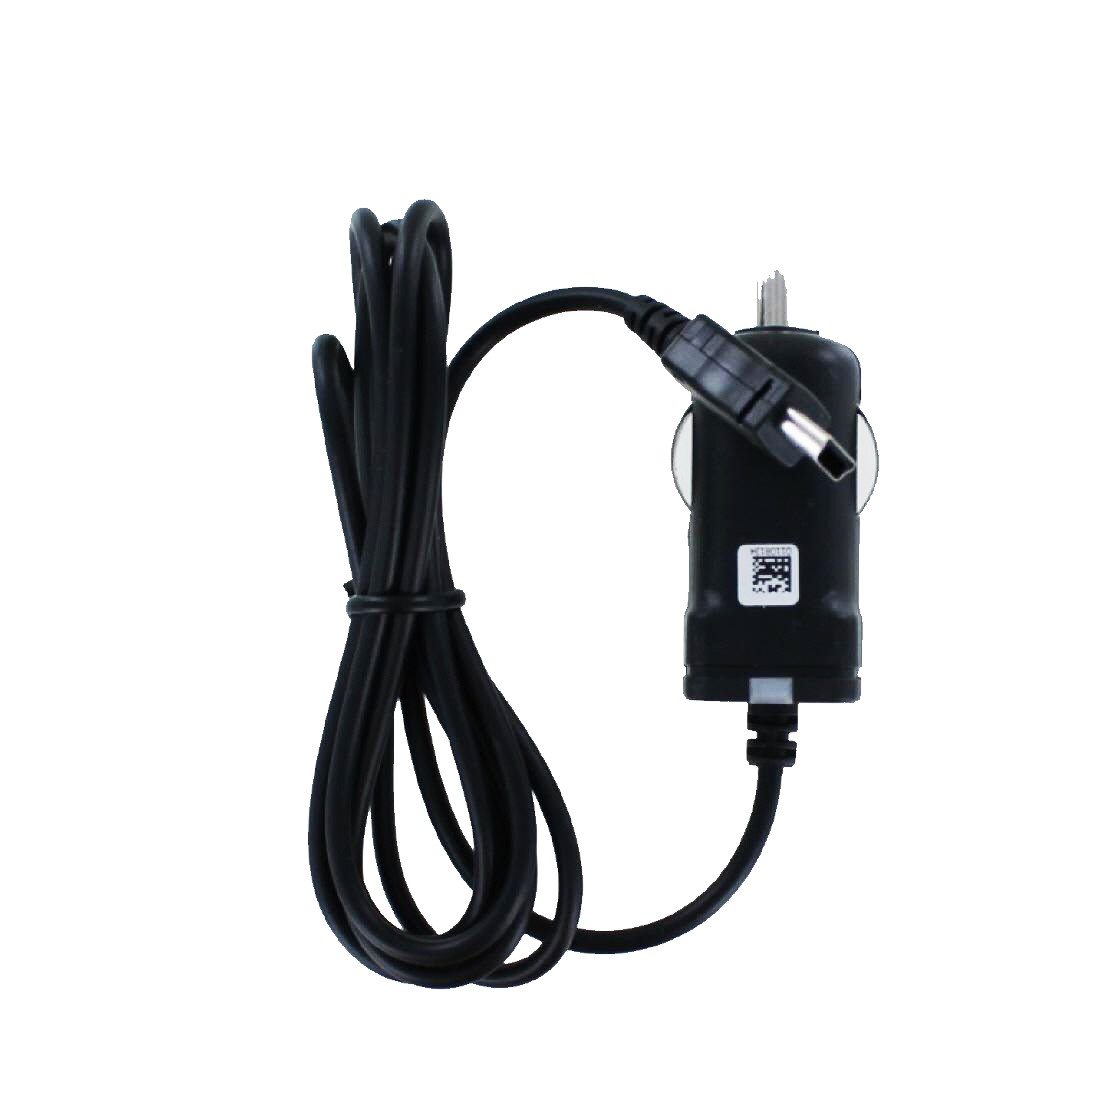 MOBILOTEC Ladekabel kompatibel mit 5 Via 130 schwarz TomTom, TomTom Netzteil/Ladegerät Volt